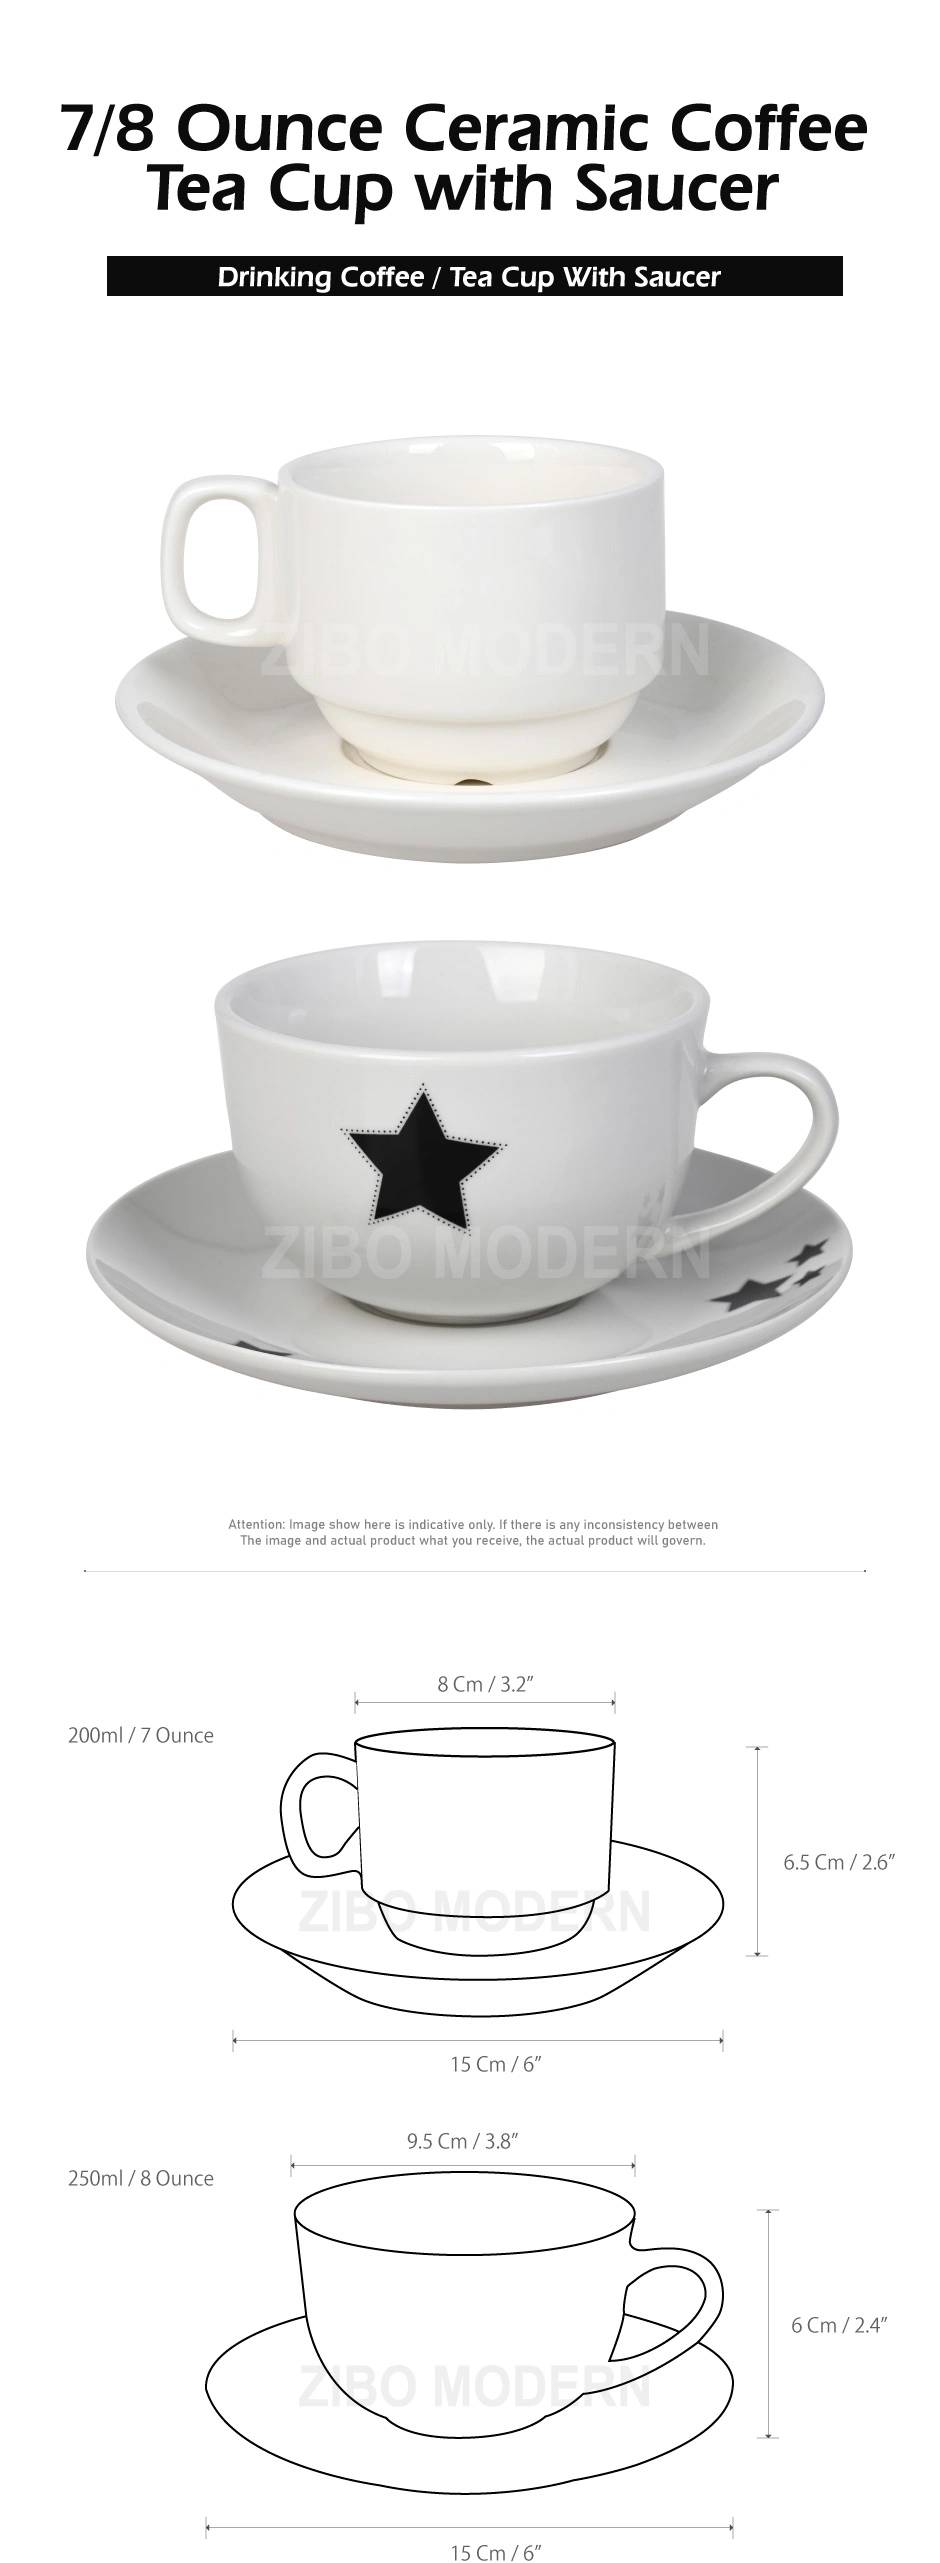 7/8 Ounce Ceramic Porcelain Coffee Tea Cup with Saucer